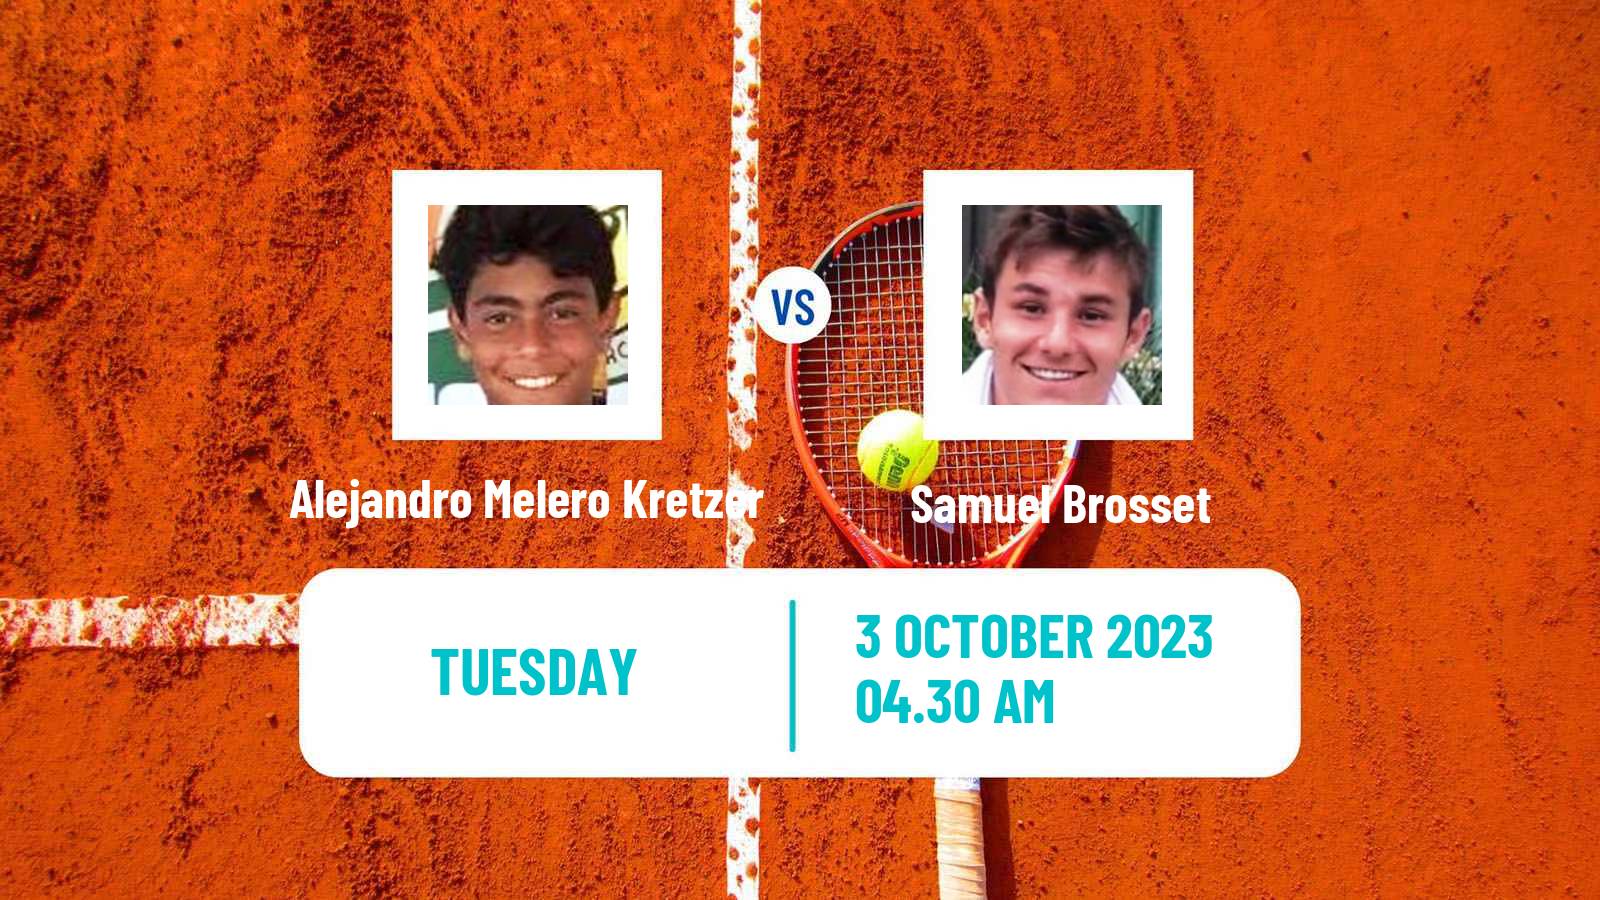 Tennis ITF M25 Zaragoza Men Alejandro Melero Kretzer - Samuel Brosset